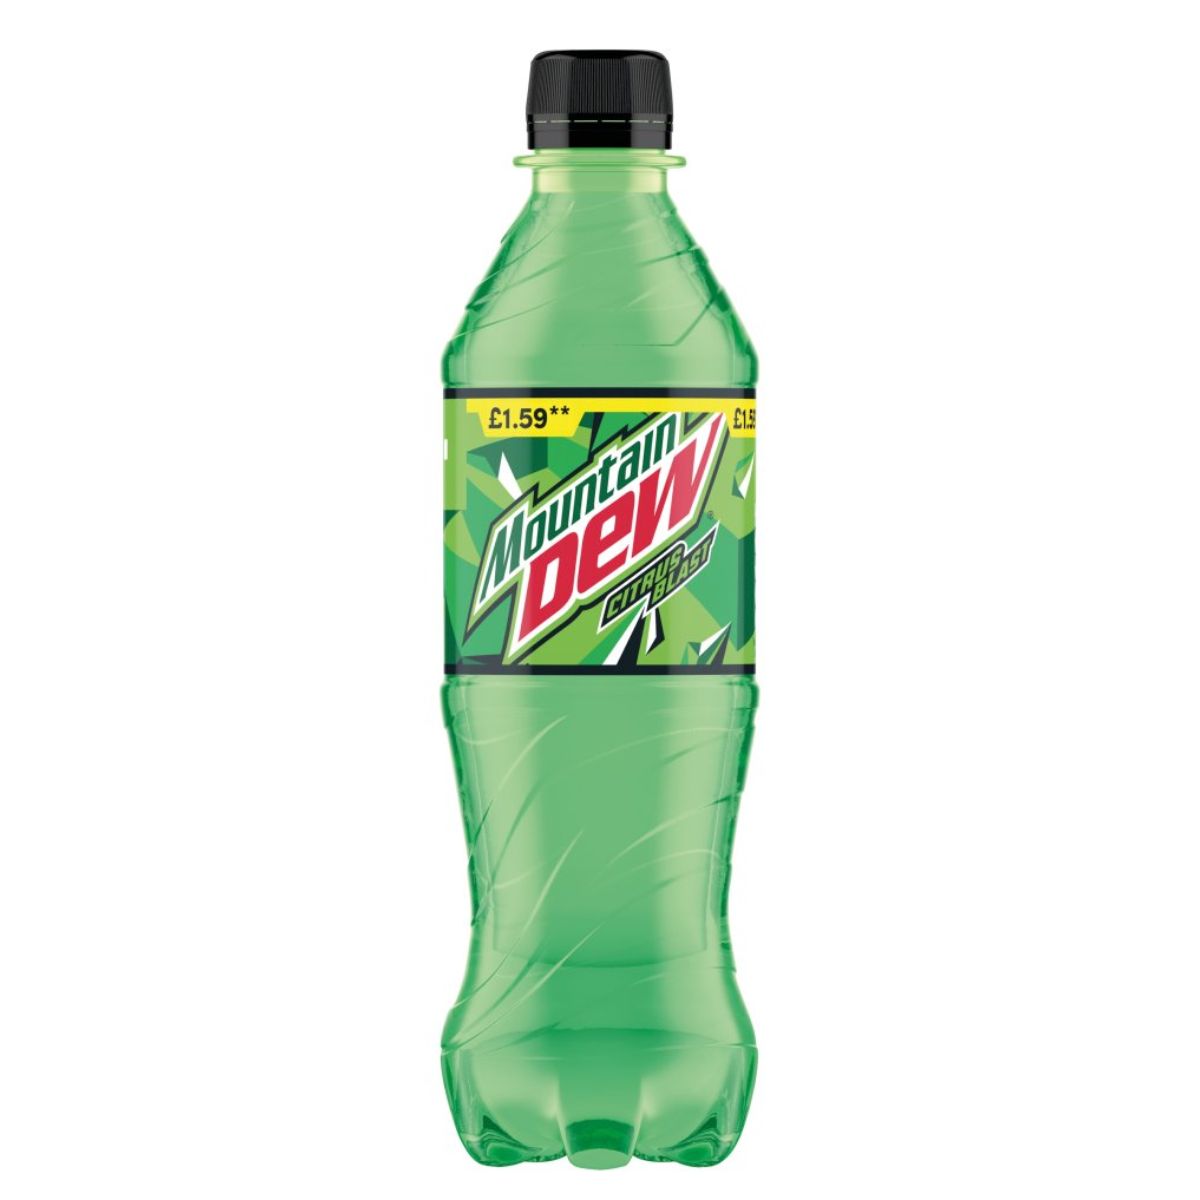 A Mountain Dew - Citrus Blast Bottle - 500ml on a white background.